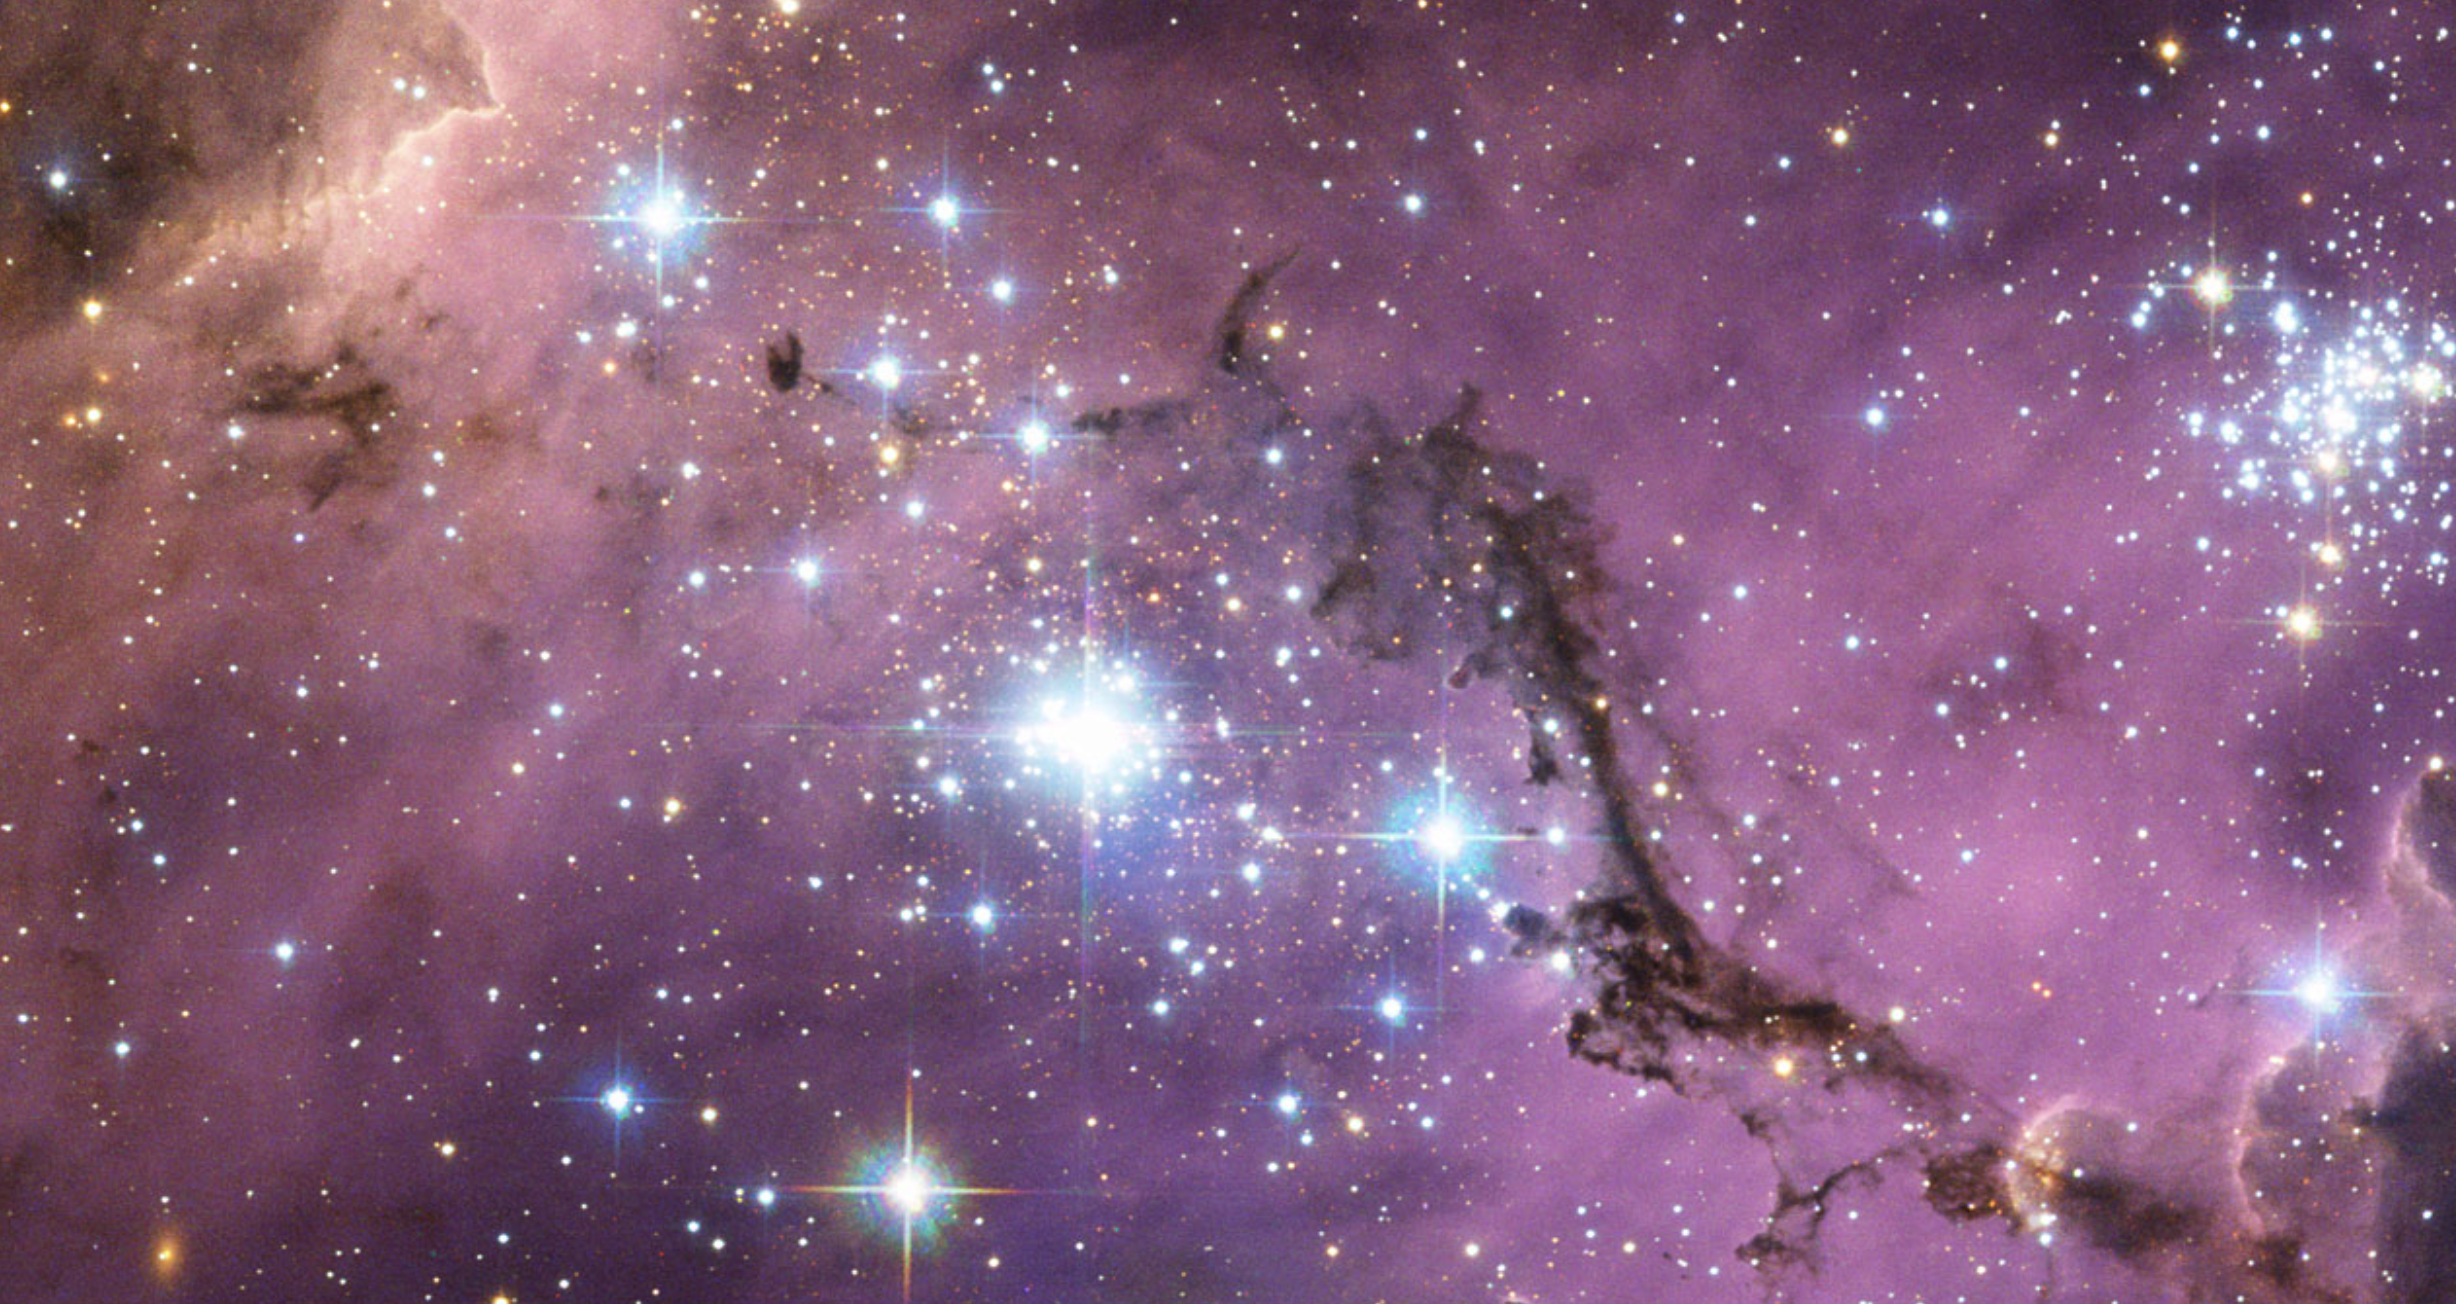 Hubble Image of the Large Magellanic Cloud. ESA/NASA/Hubble.